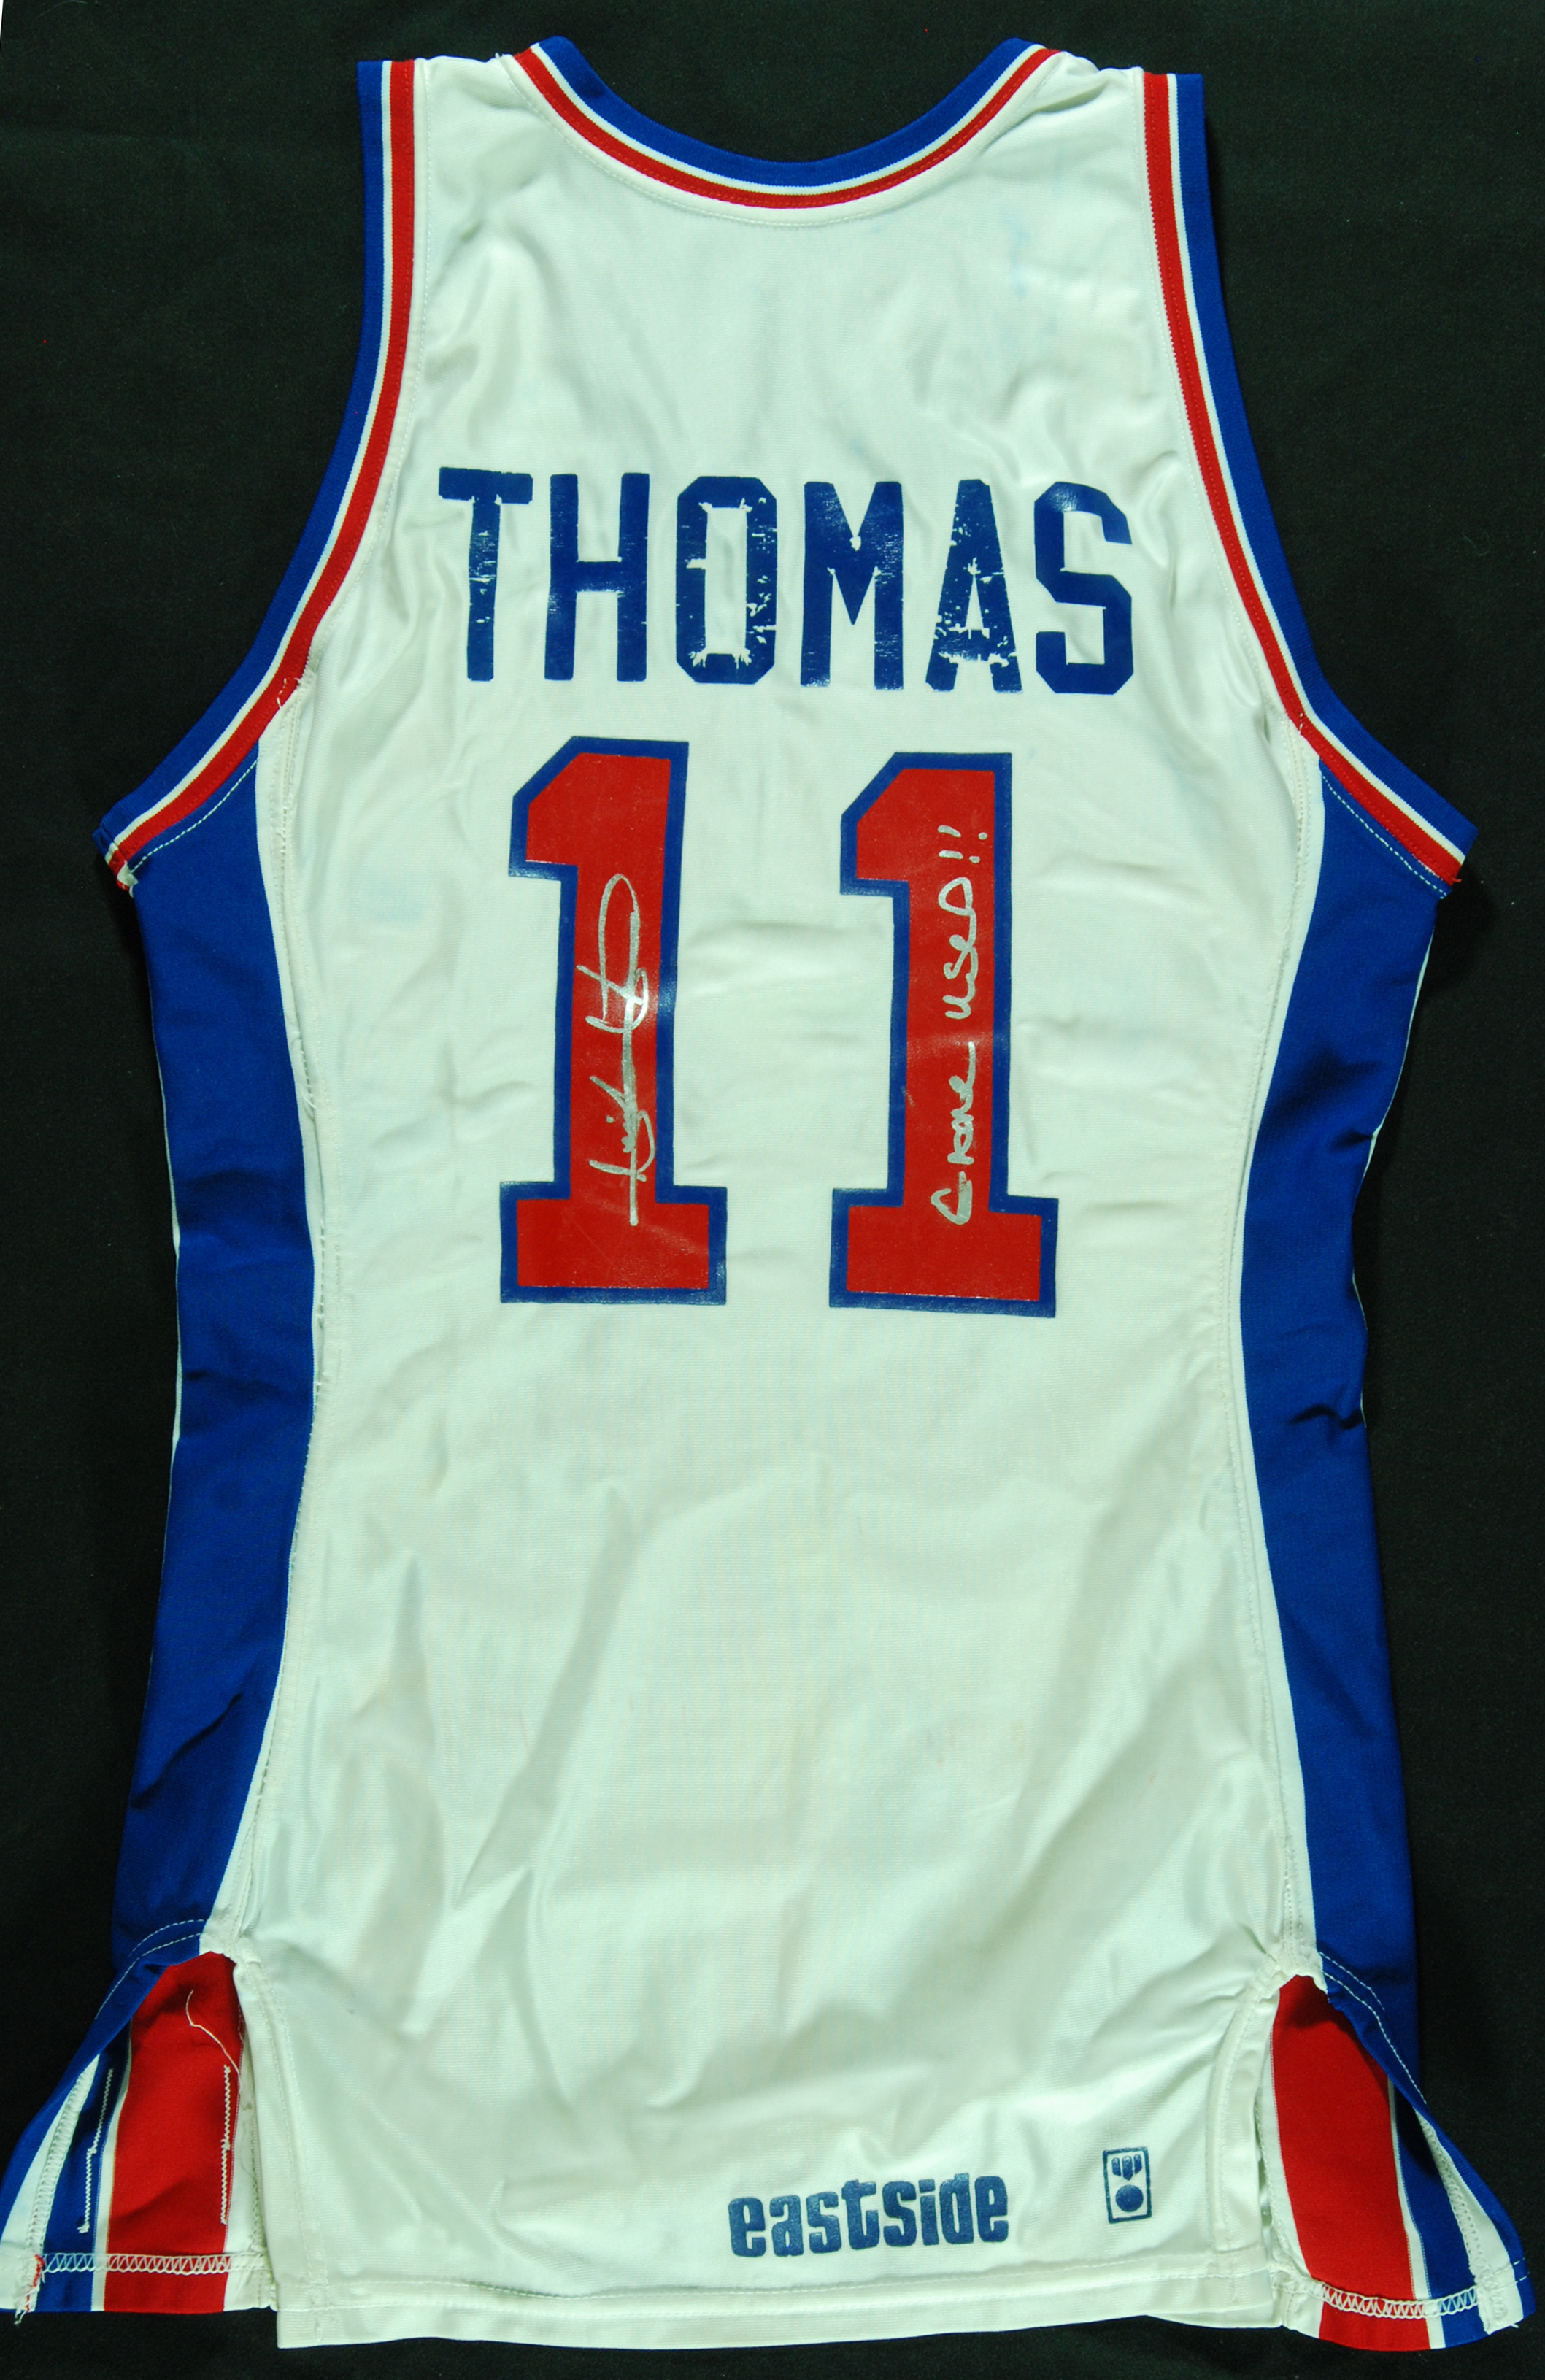 isiah thomas signed jersey